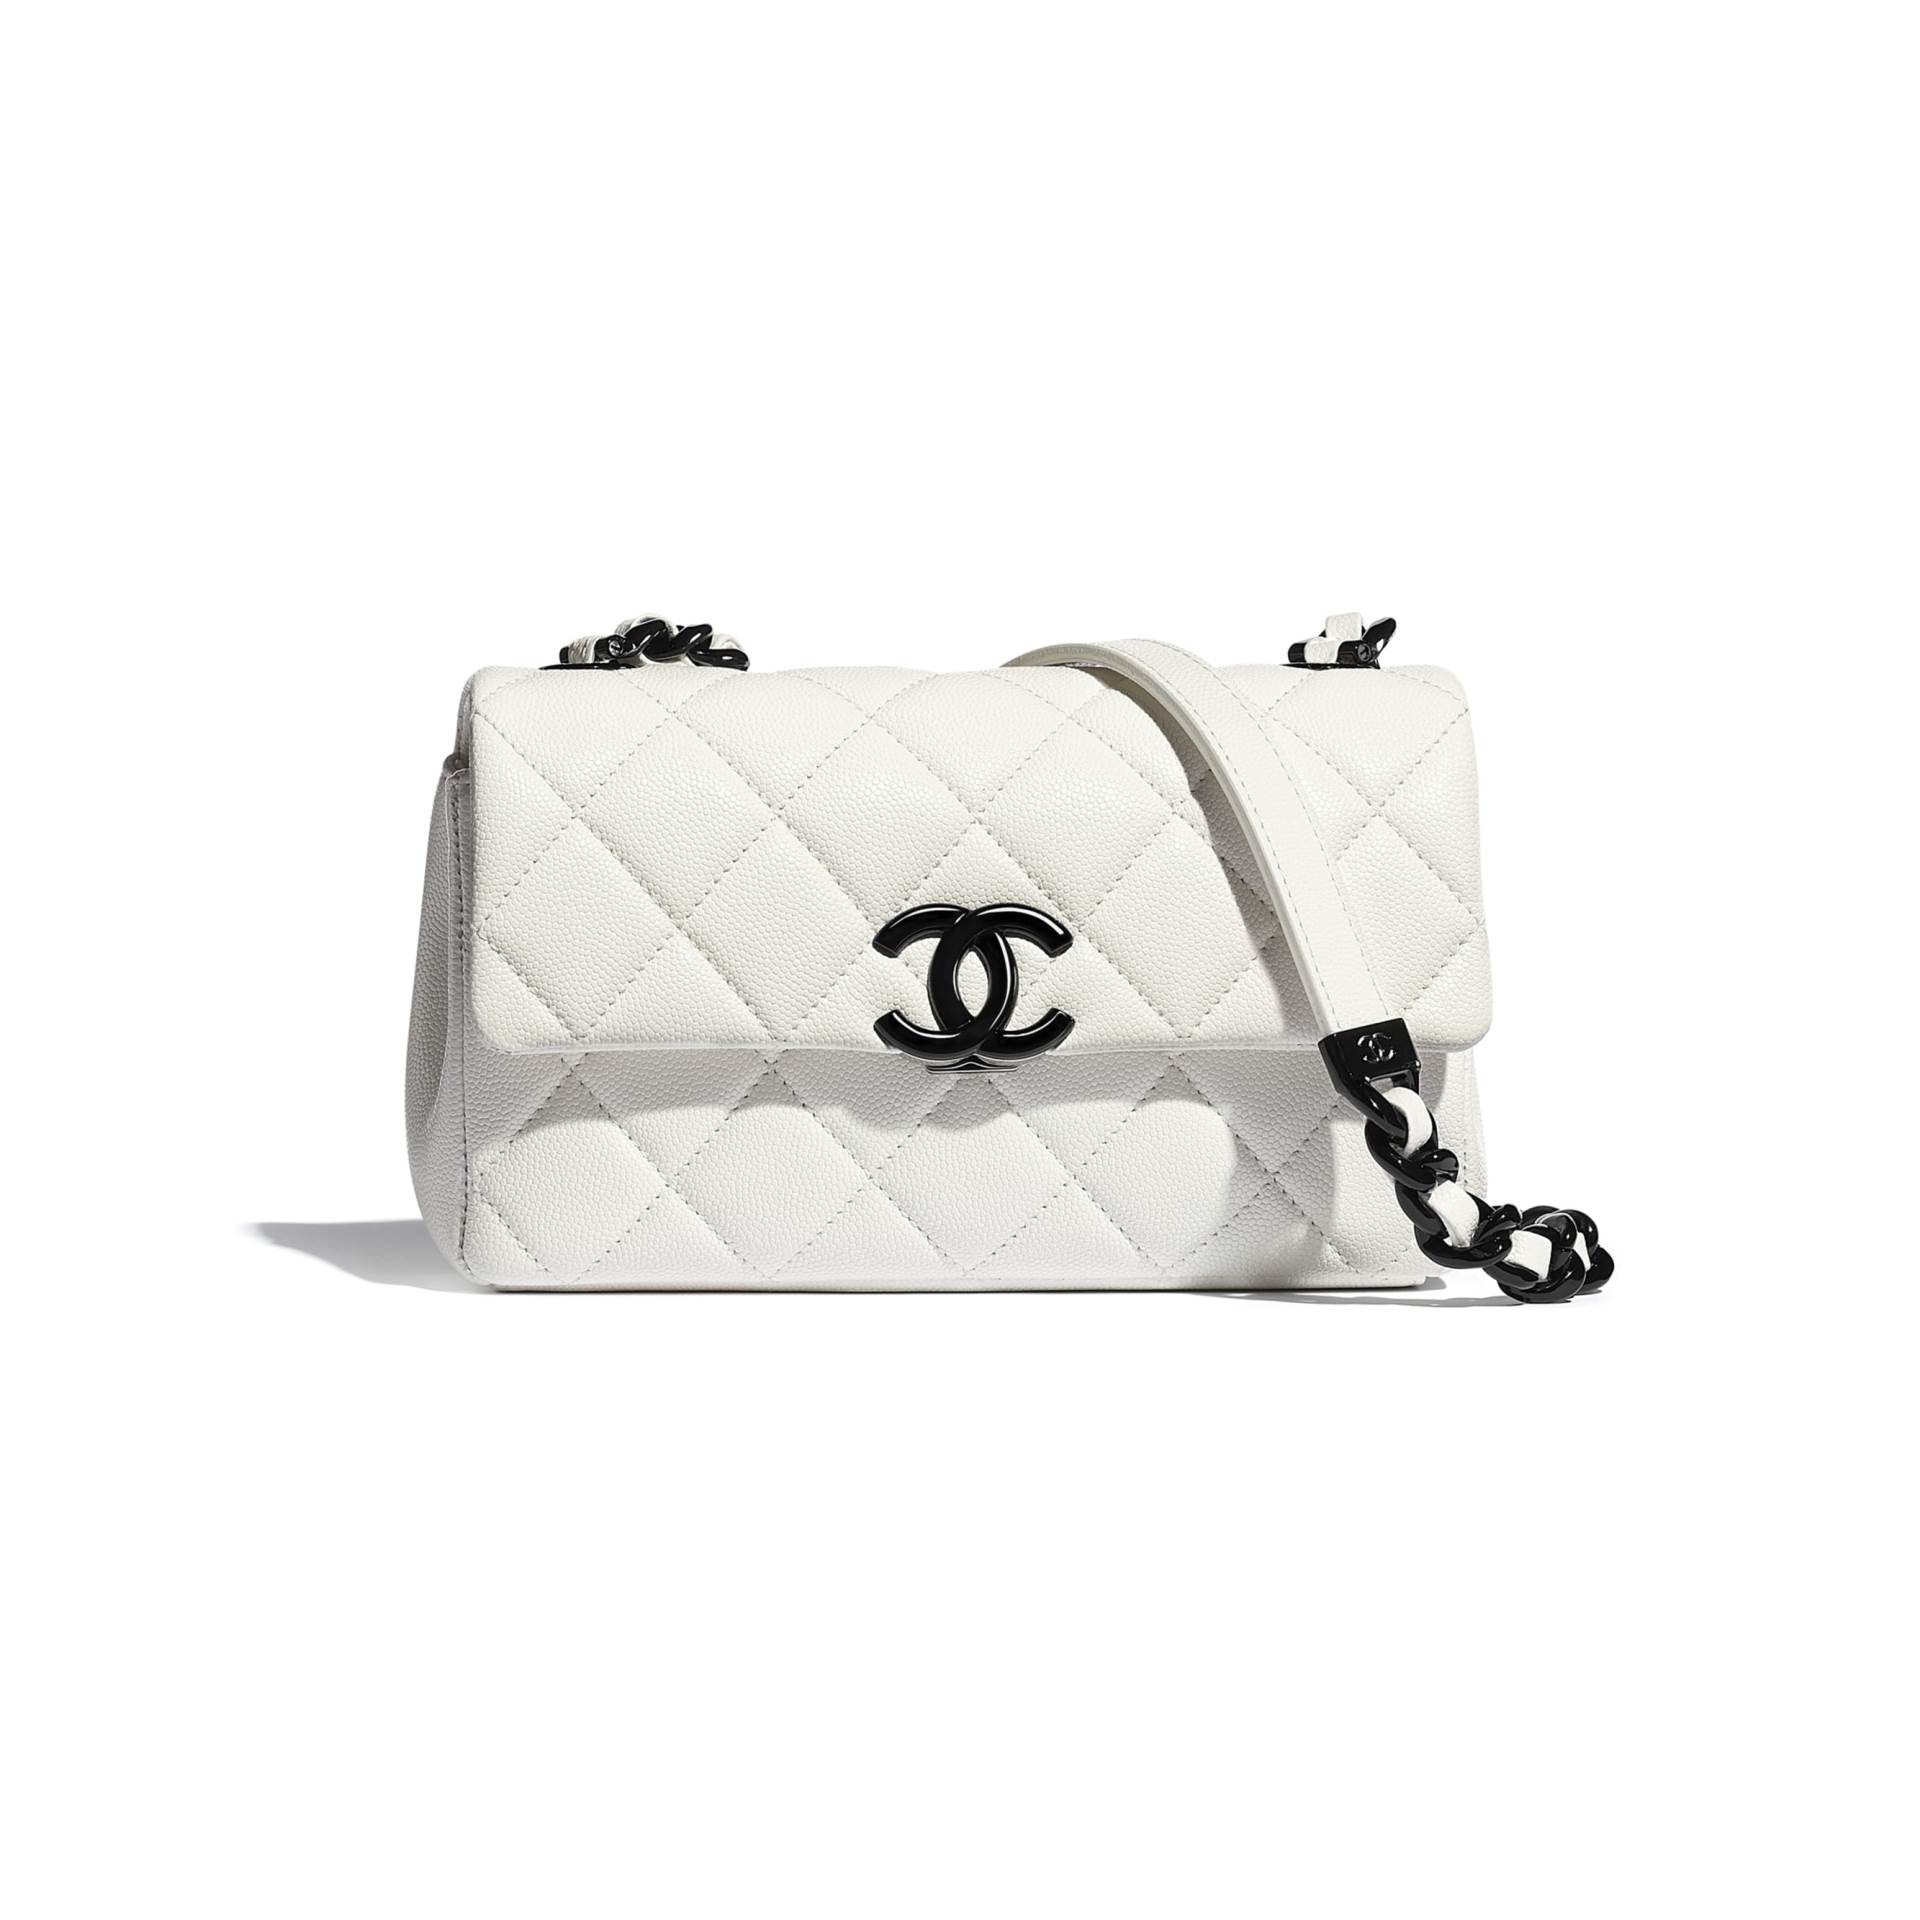  Chanel torba 